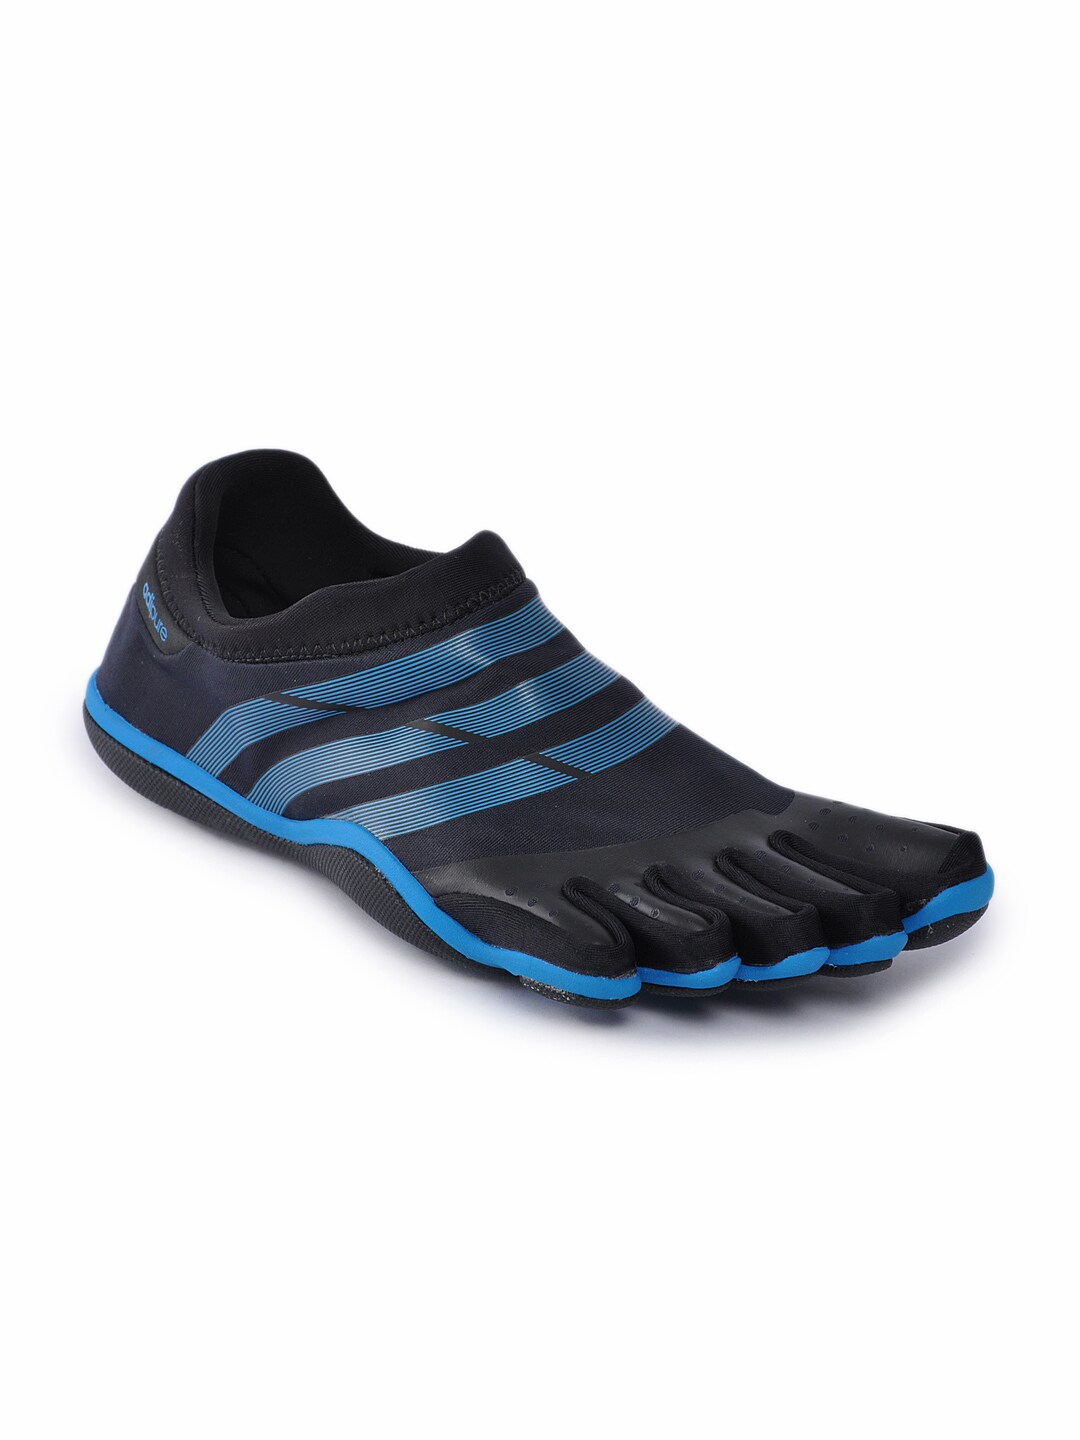 ADIDAS Men Adipure Trainer Black Sports Shoes